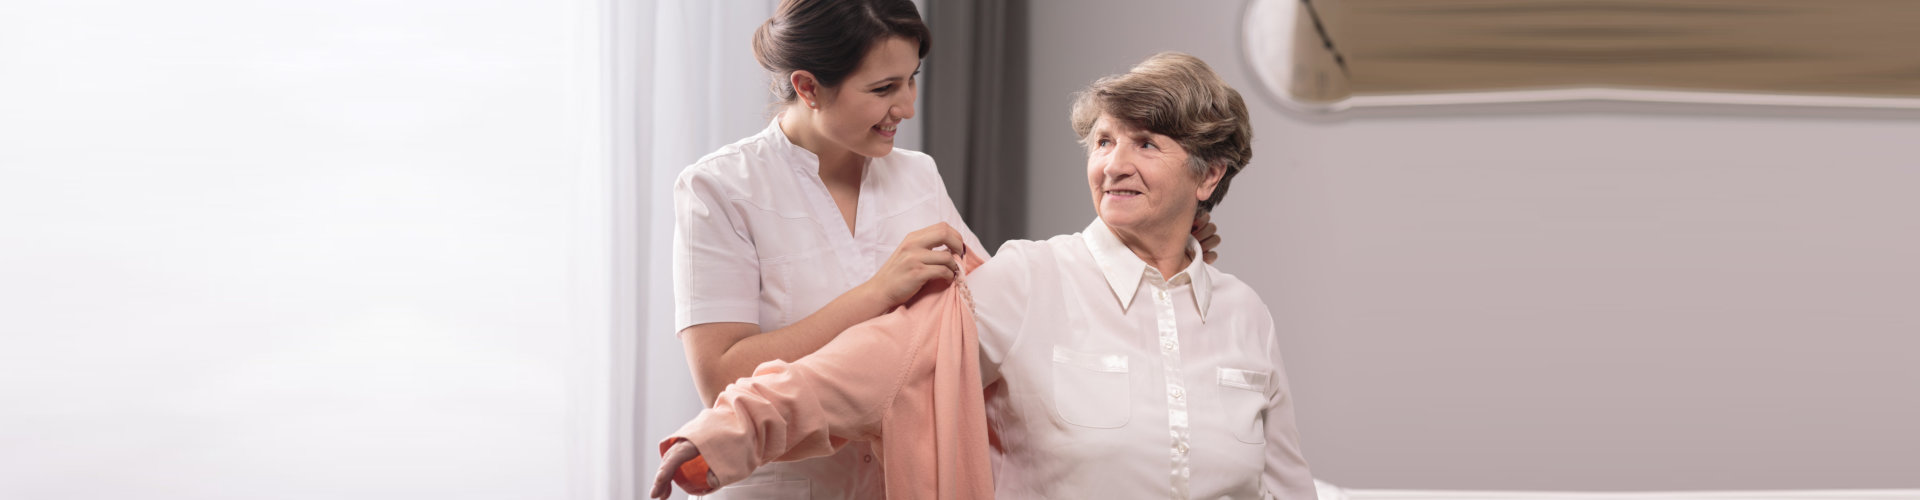 a caregiver woman assisting an elderly woman